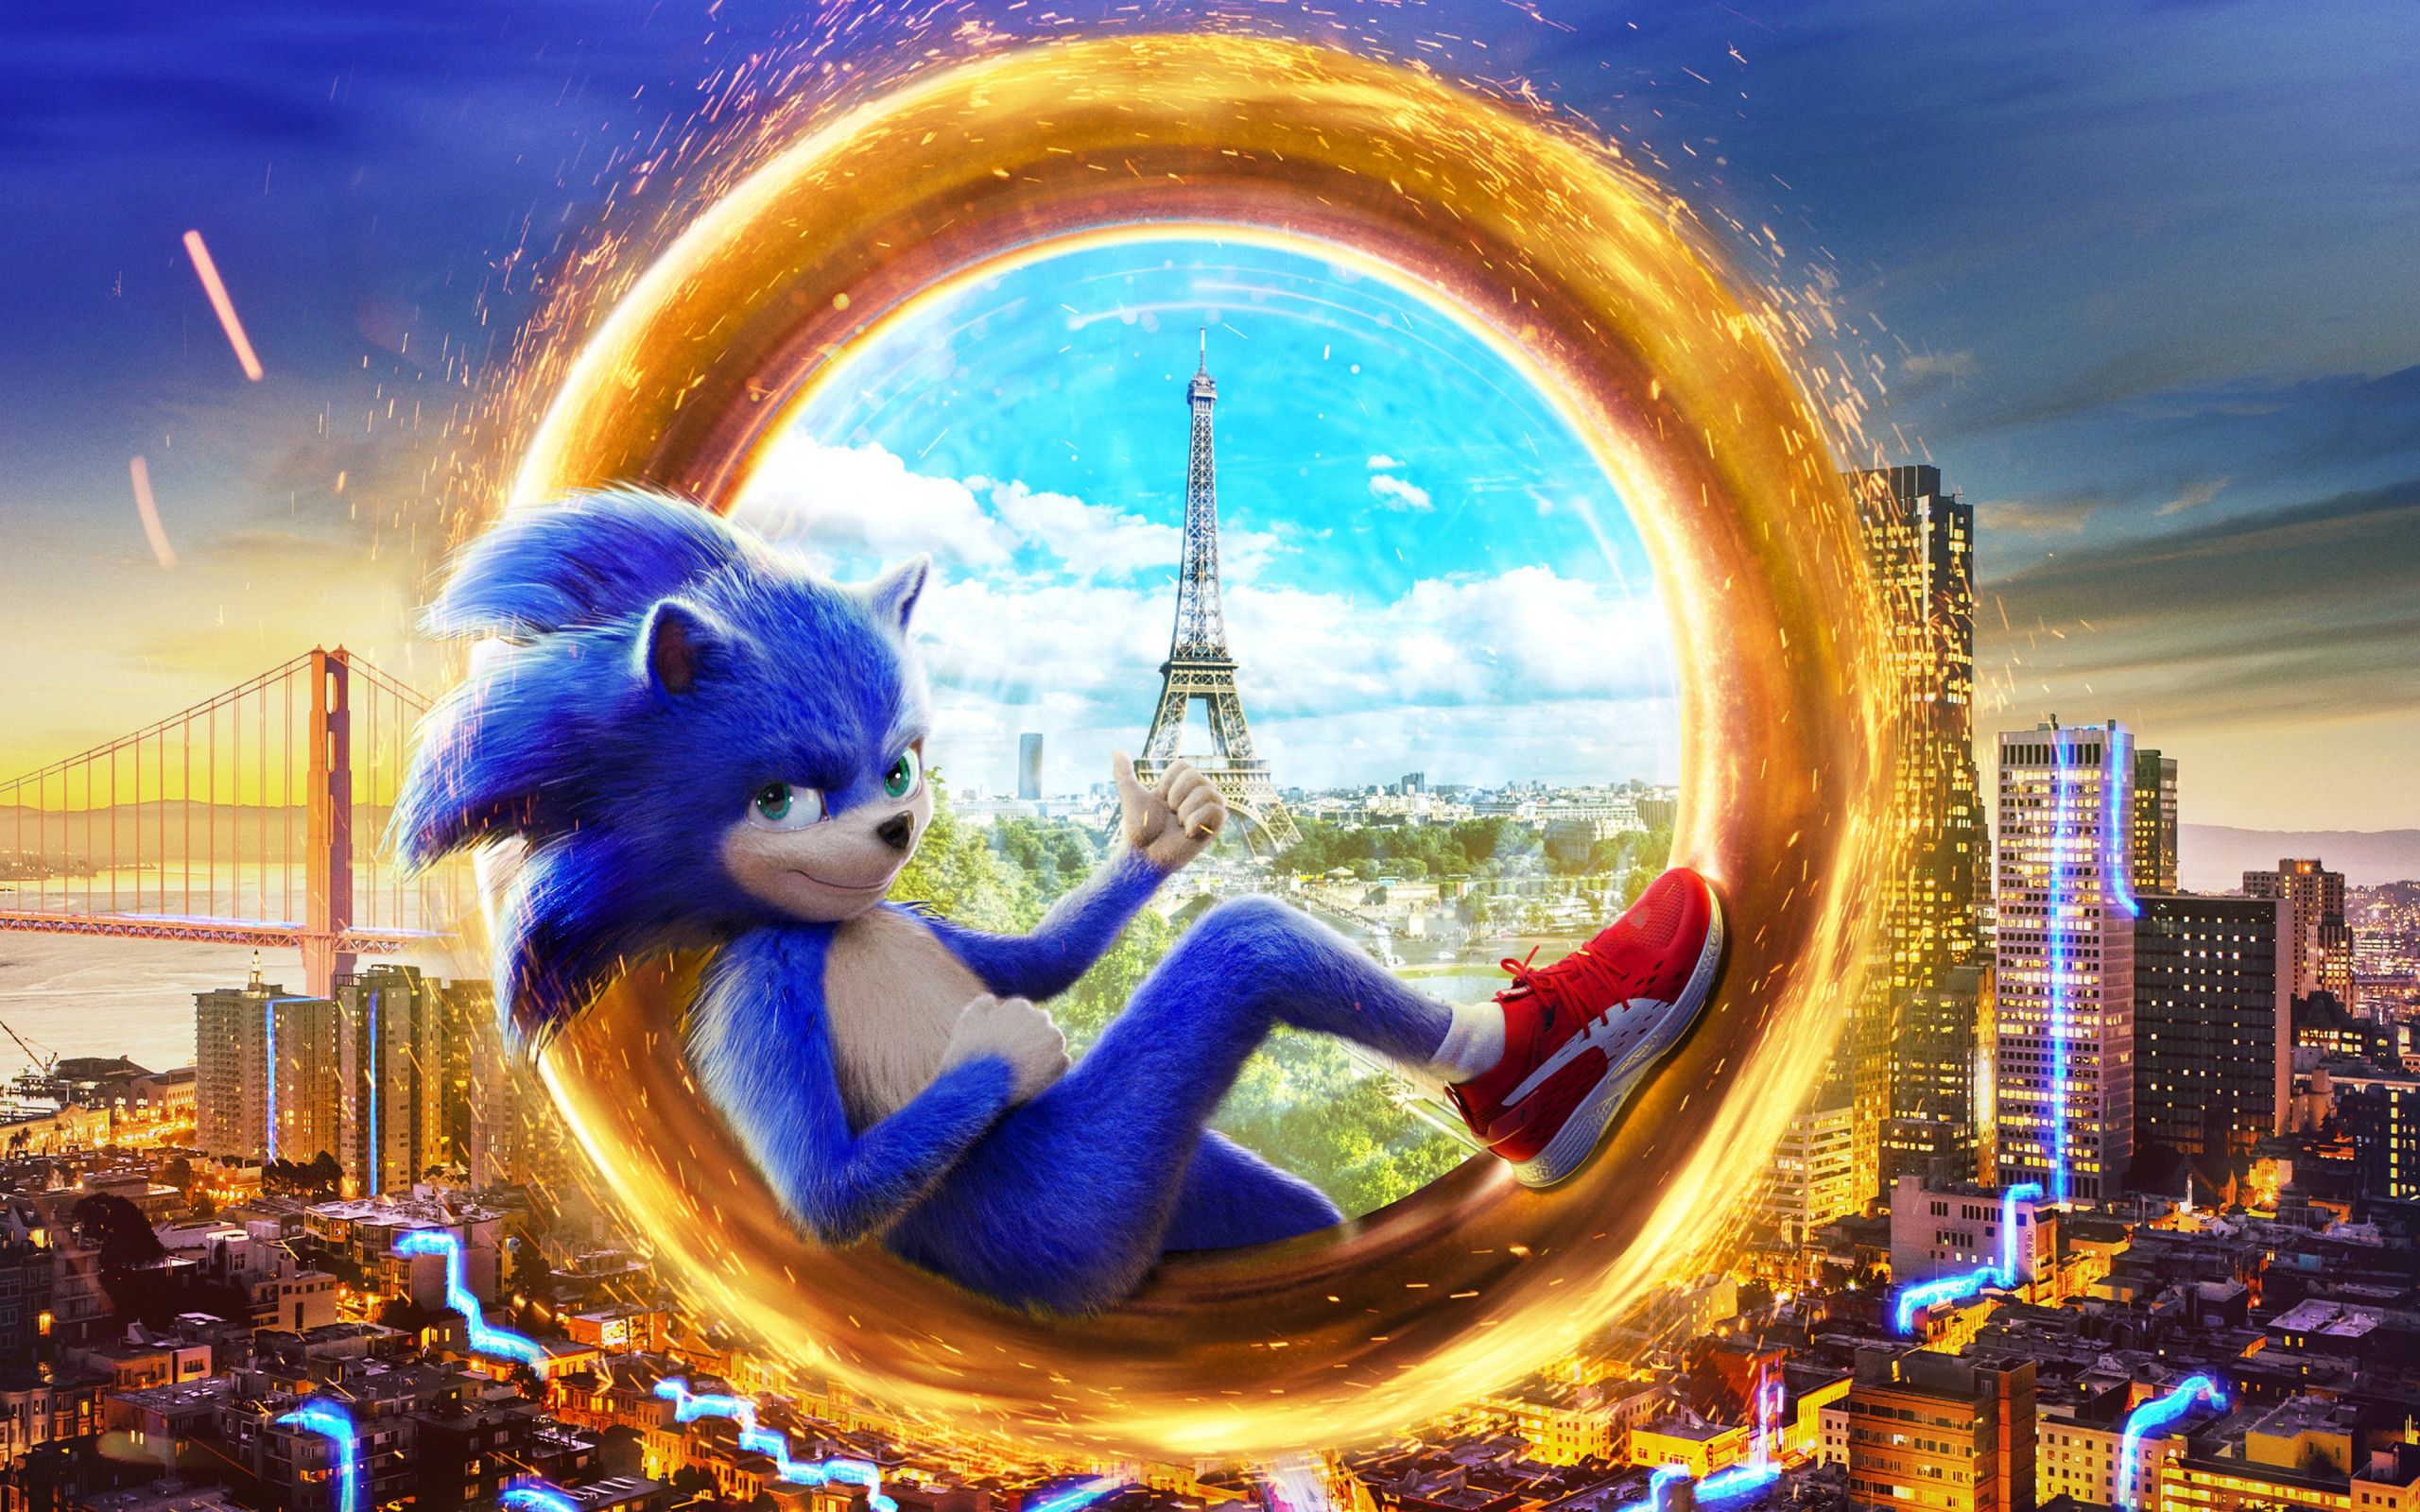 Download wallpaper: Sonic the Hedgehog 2560x1600